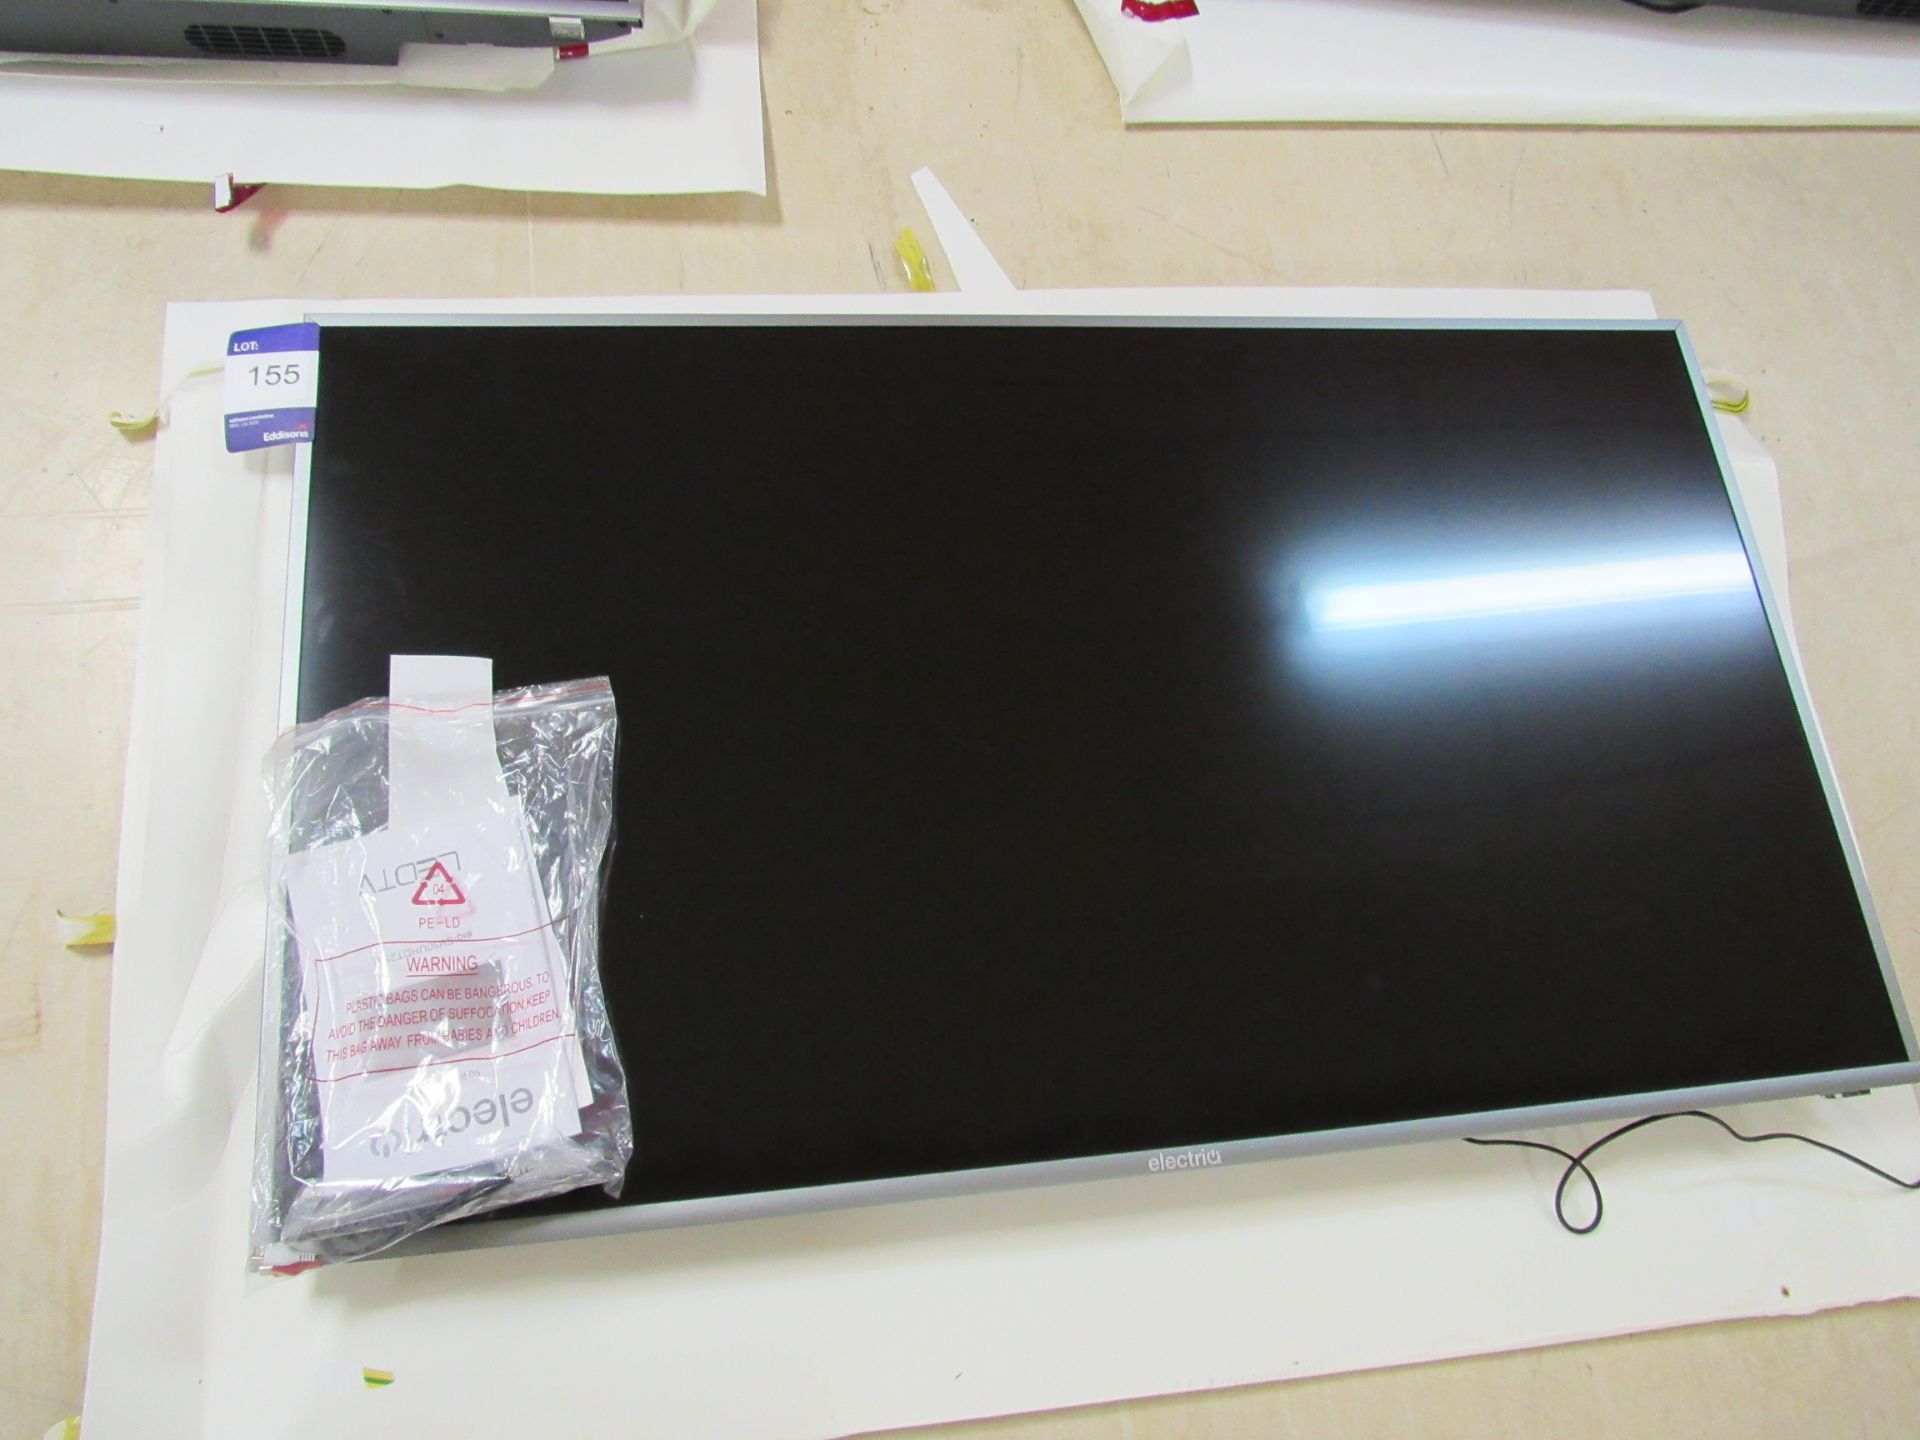 Electric eiq – SV50UHDT25M 50” LED TV - Image 2 of 2